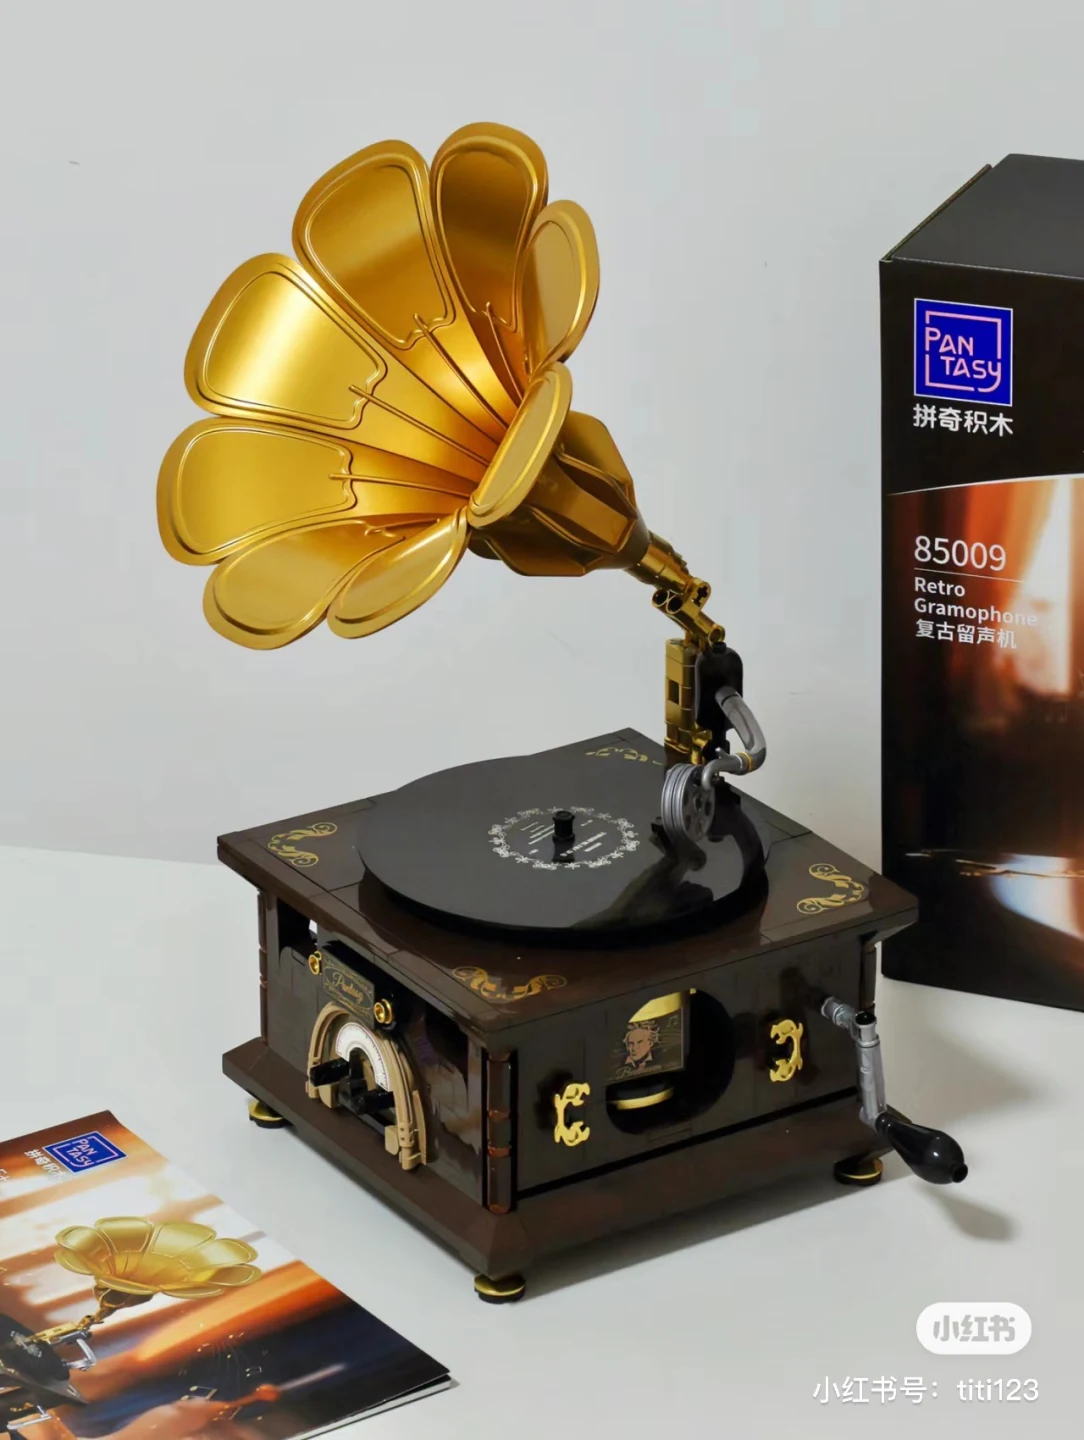 PAN TASY™ Retro Phonograph Building Blocks, The Special Gift